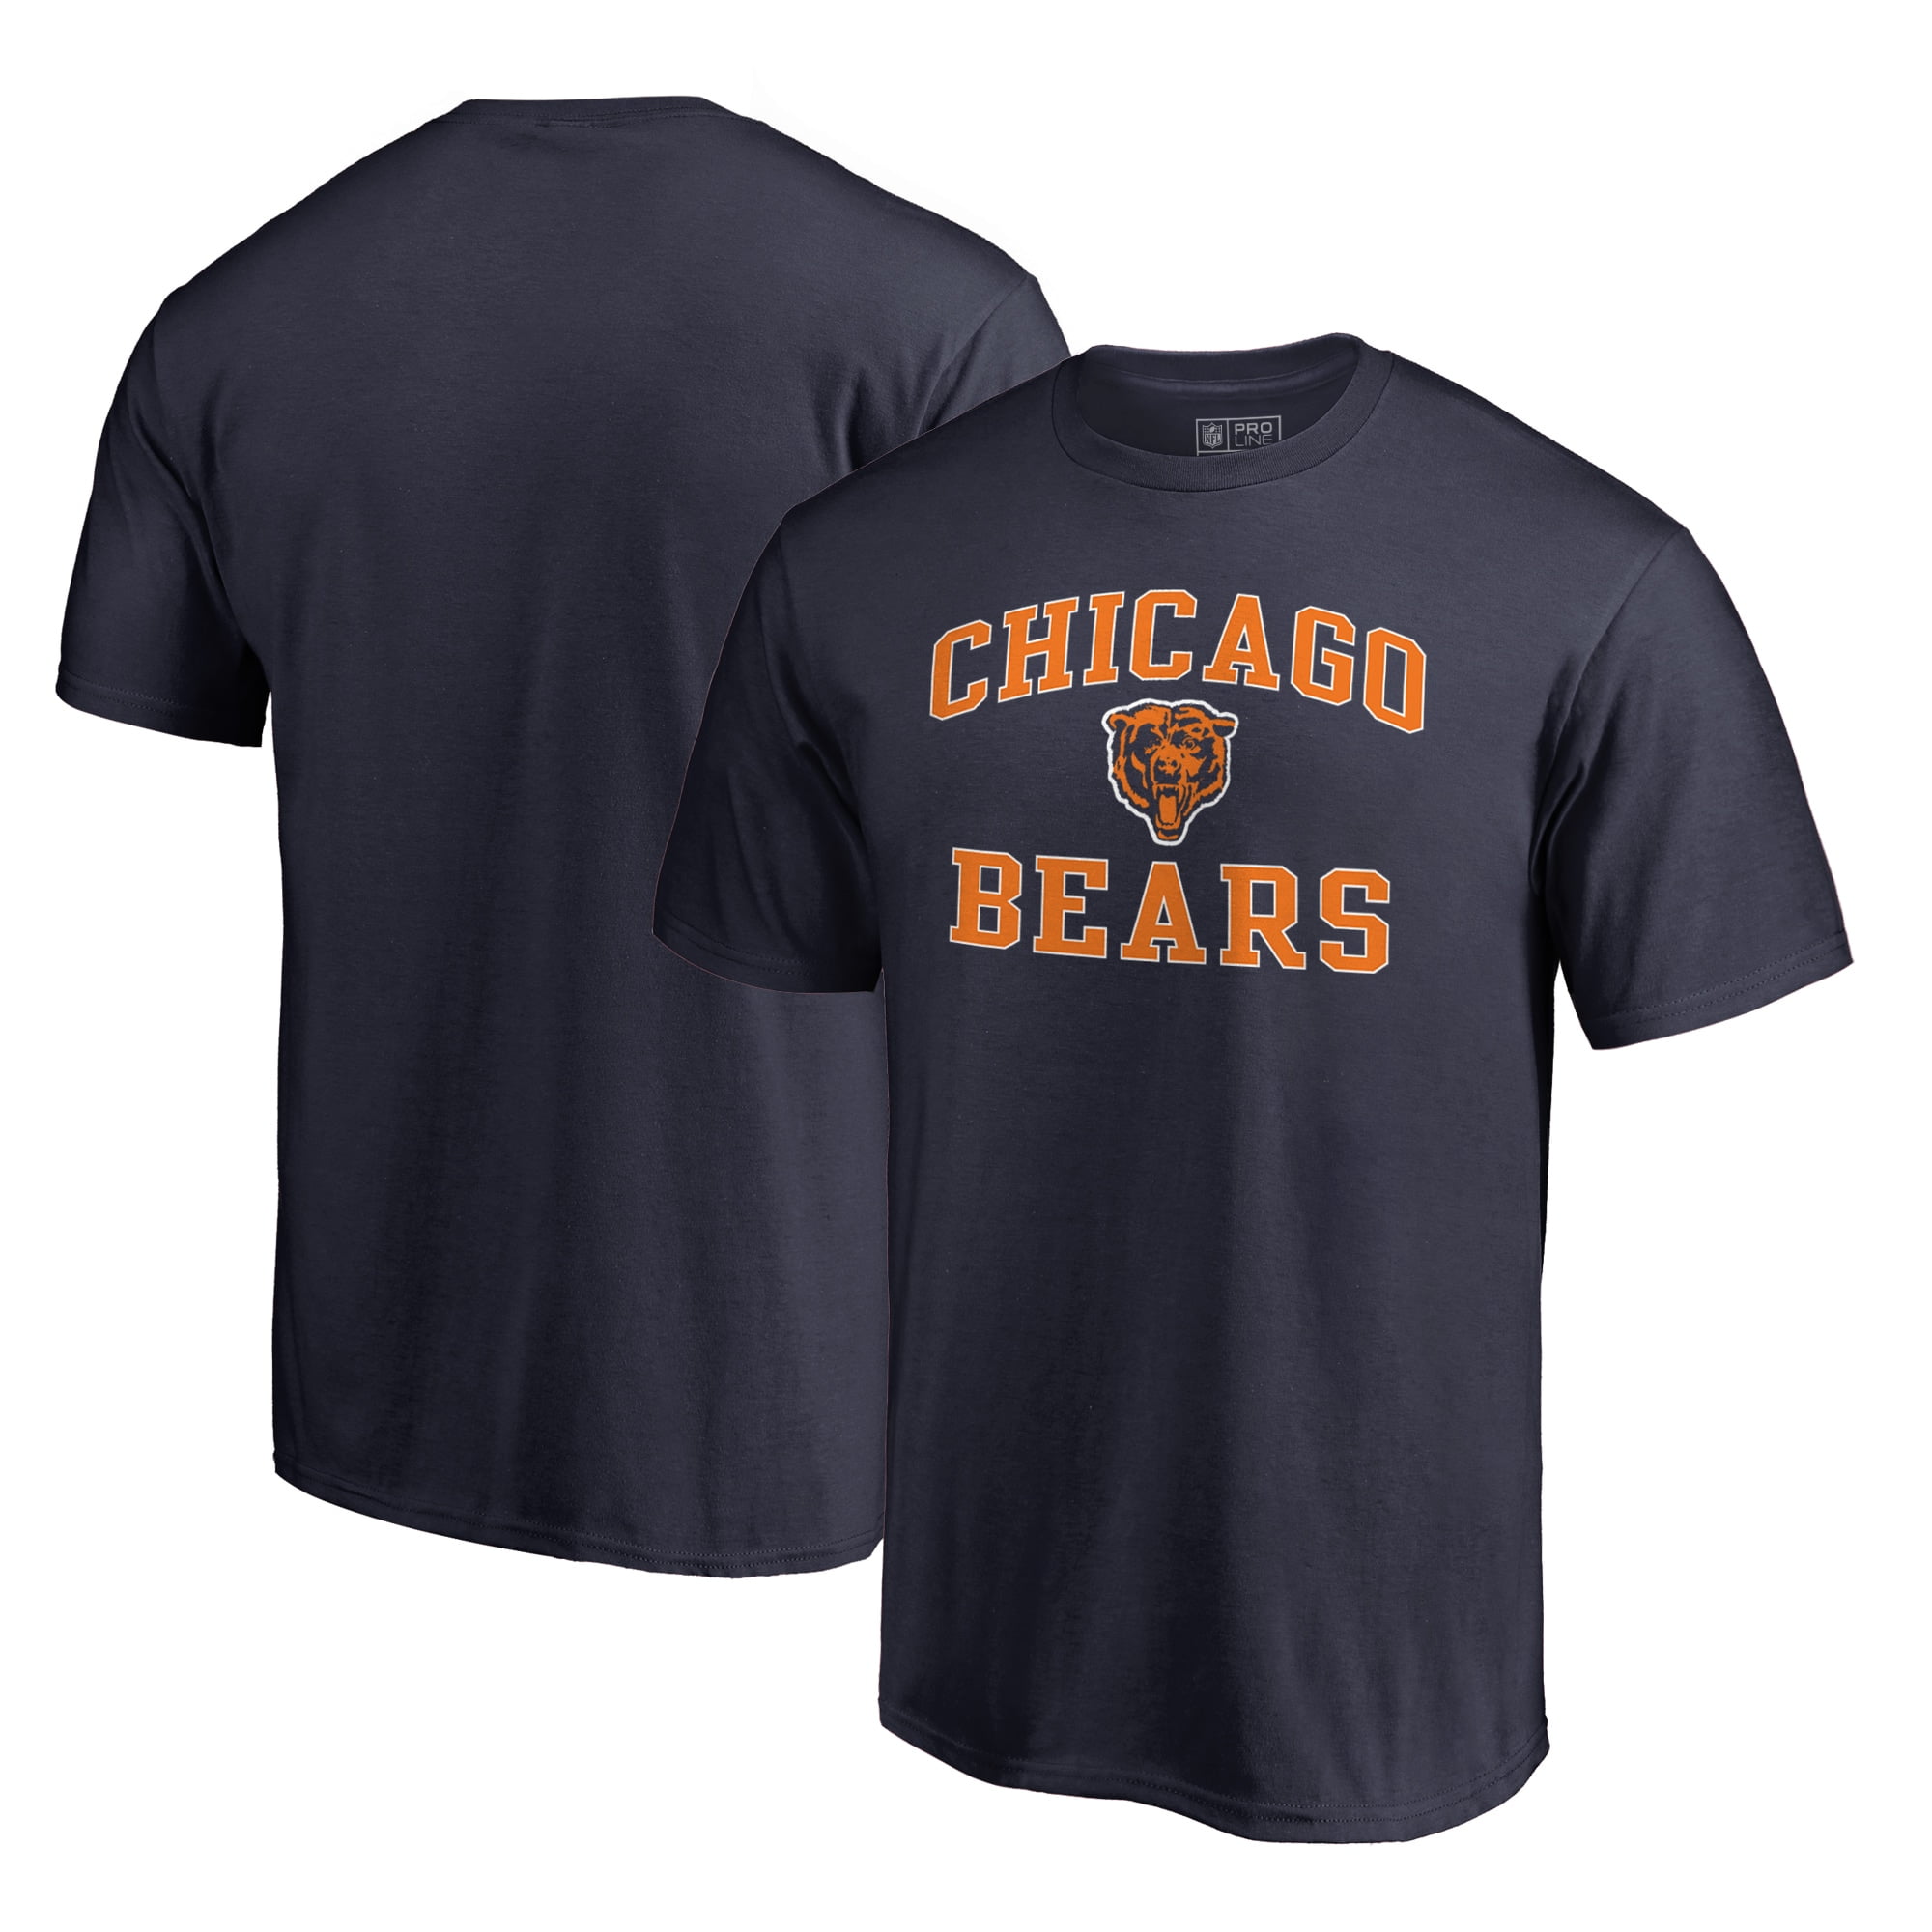 chicago bears mens t shirt